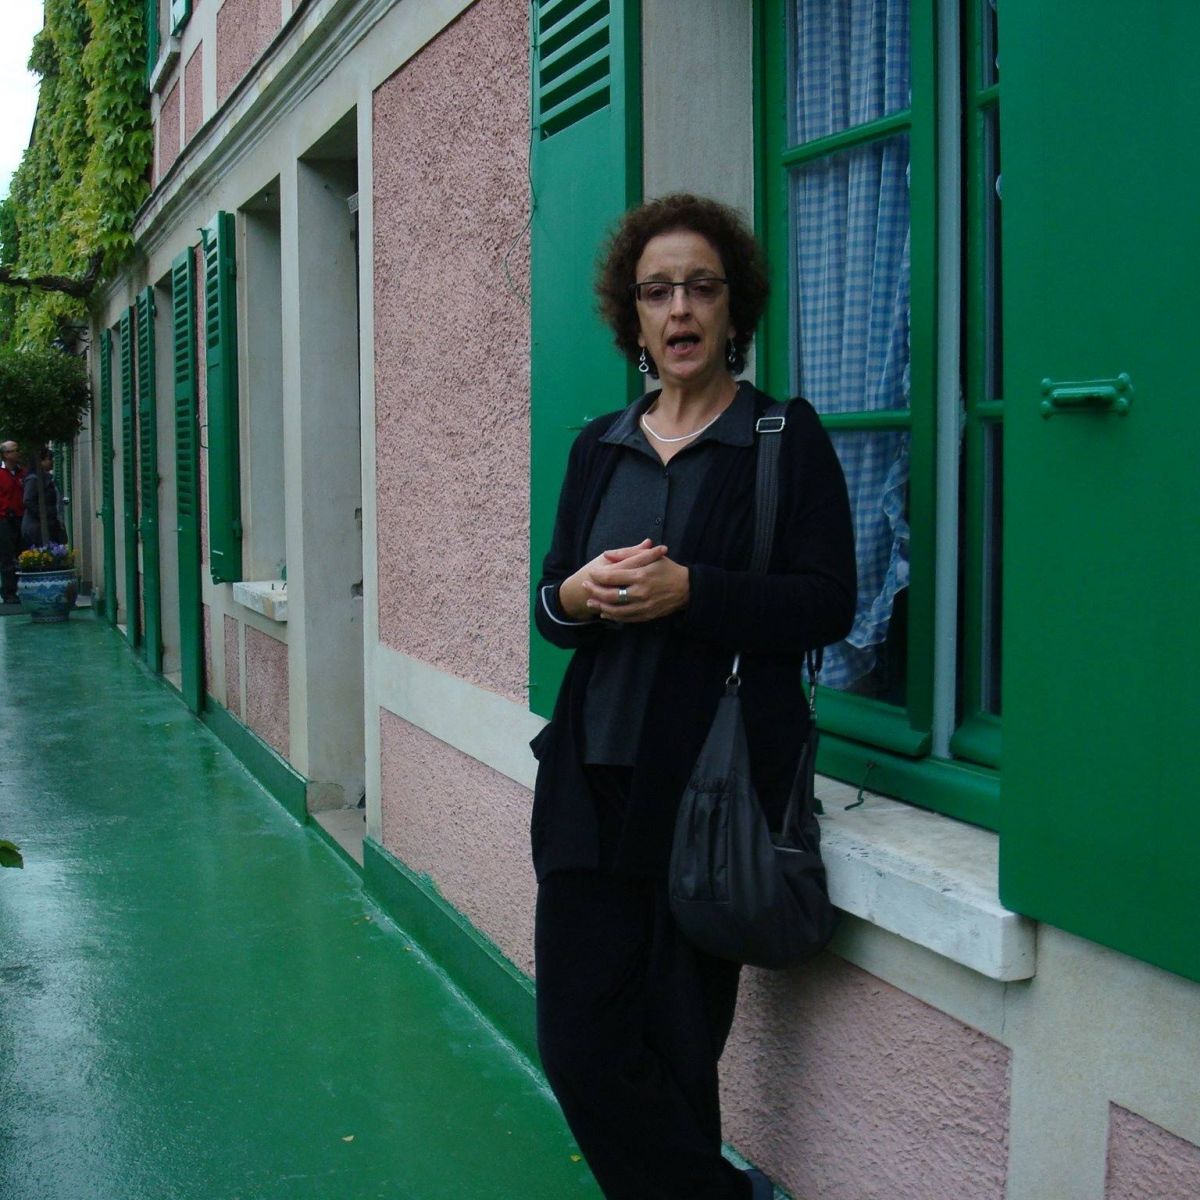 Morre a musicóloga e jornalista Maria Luiza Kfouri, aos 69 anos - Foto: Maria Luiza Kfouri